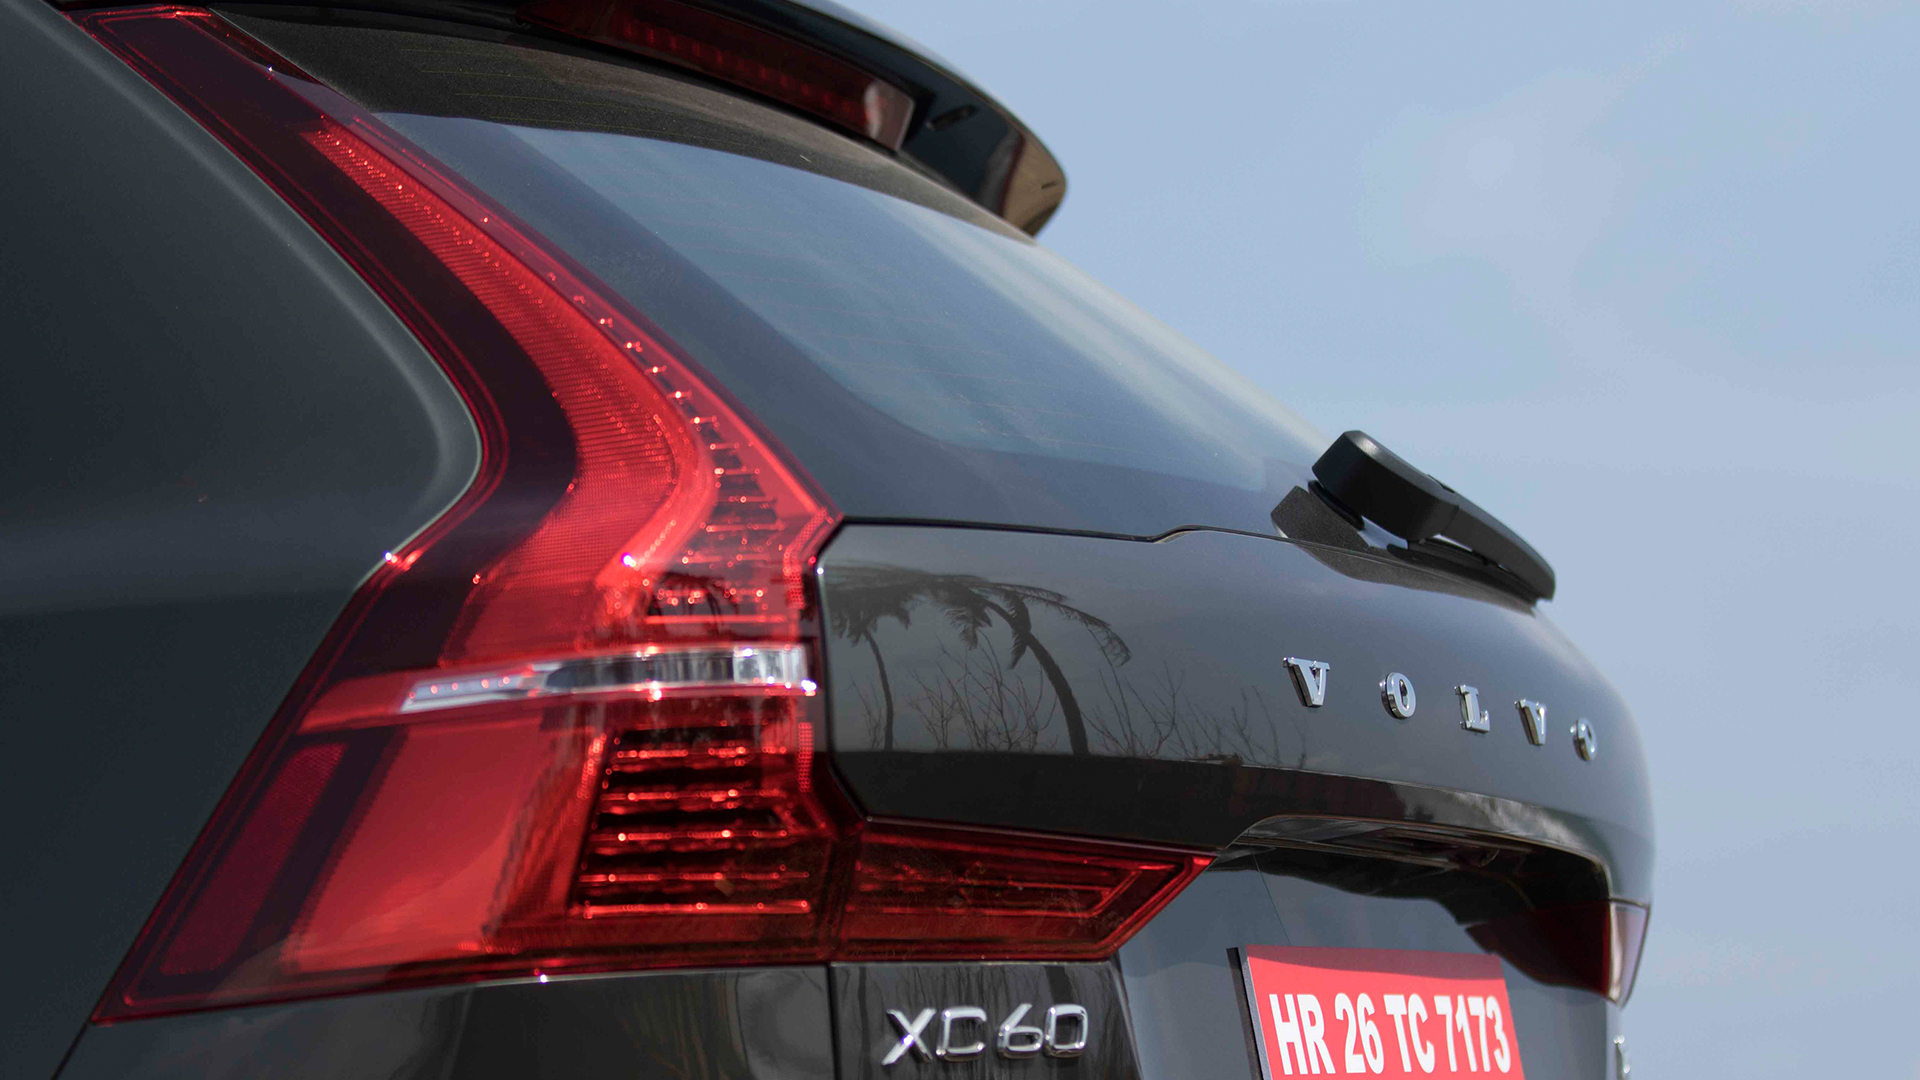 Volvo XC60 2018 Inscription D5 Exterior